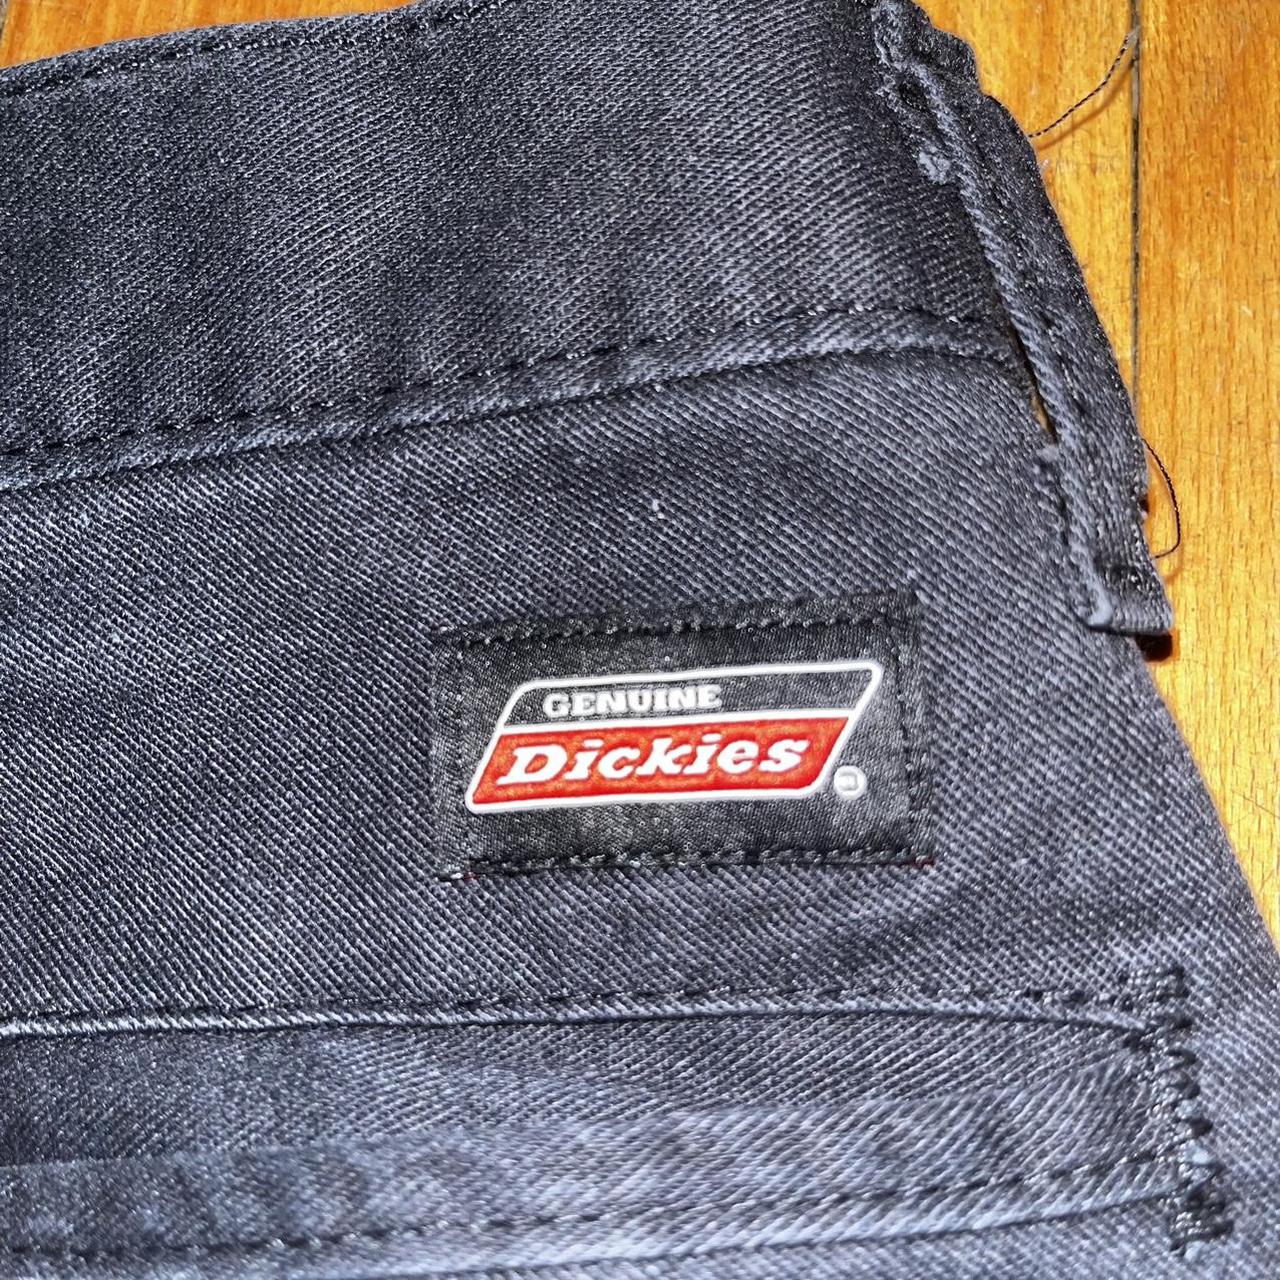 Dickies Cargo Pants (30x30) #skater #cargopants... - Depop